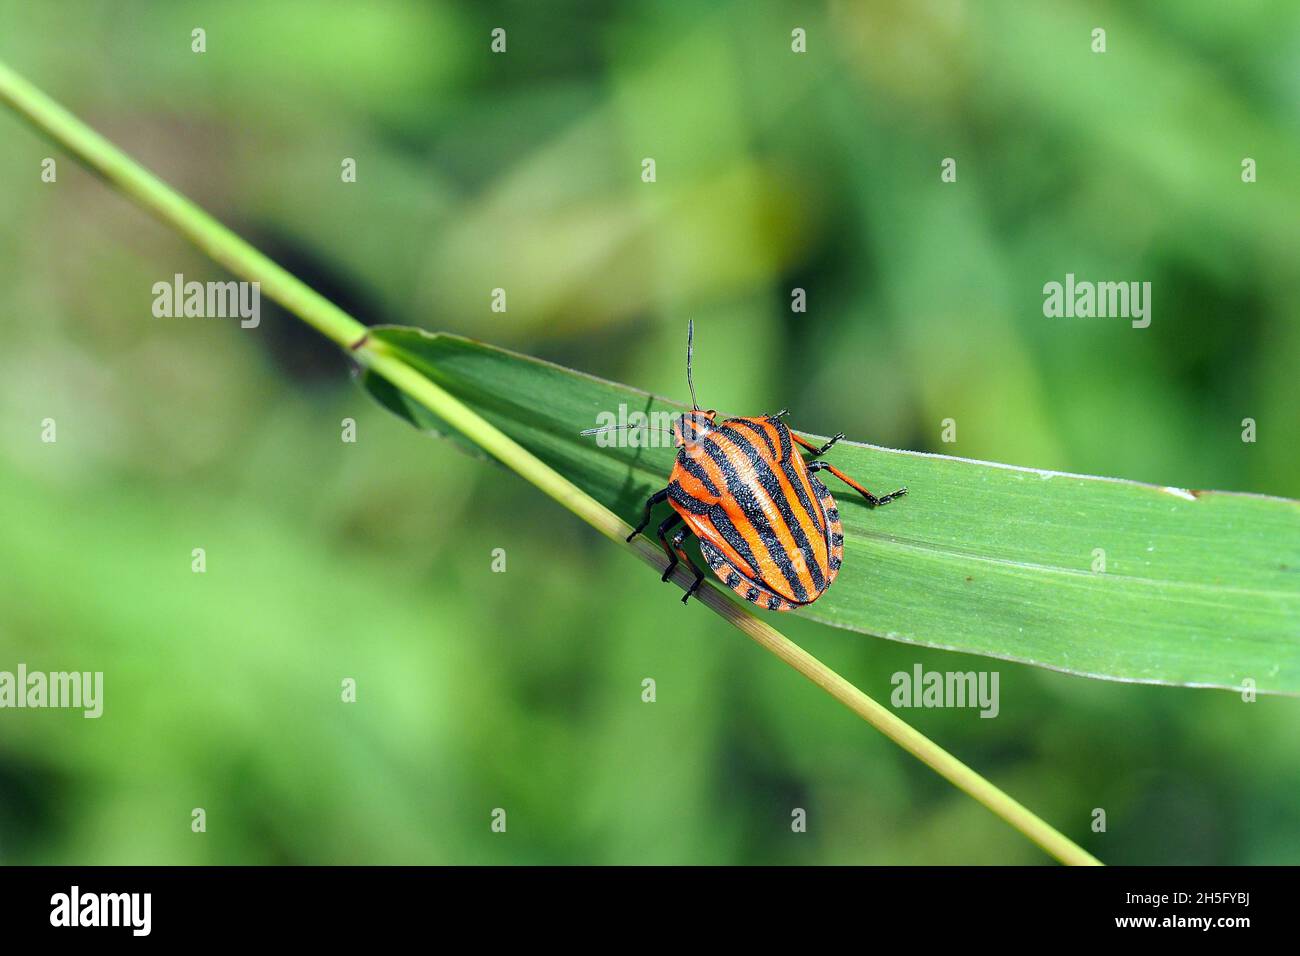 Striped bug, Streifenwanze, Graphosoma lineatum, csíkos pajzsospologska, Budapest, Ungheria, Magyarország, Europa Foto Stock